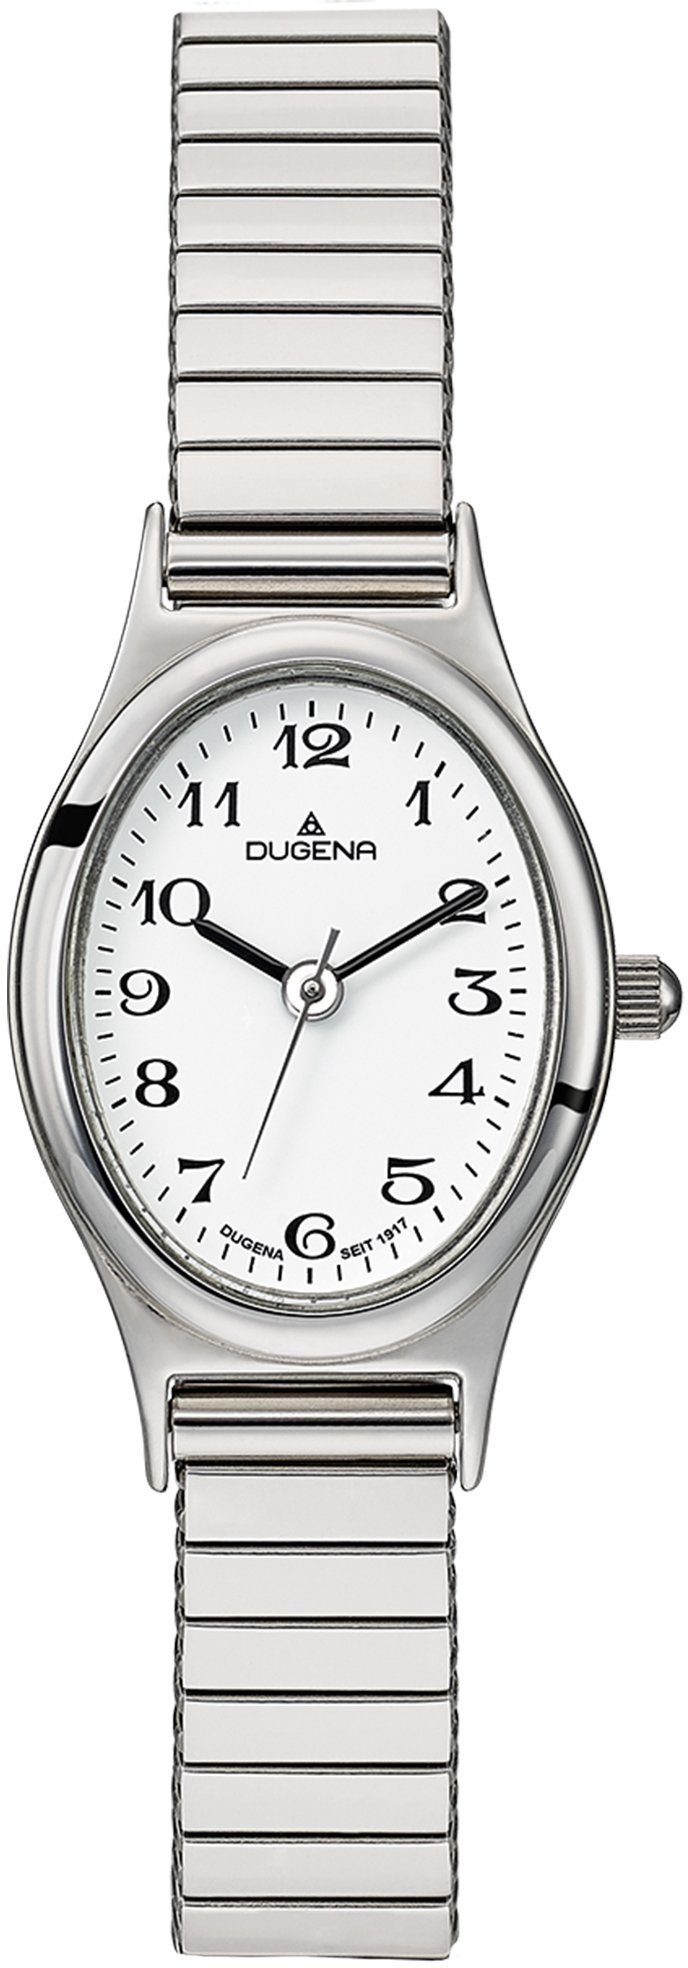 Dugena Quarzuhr Vintage Comfort, 4460748 Silber